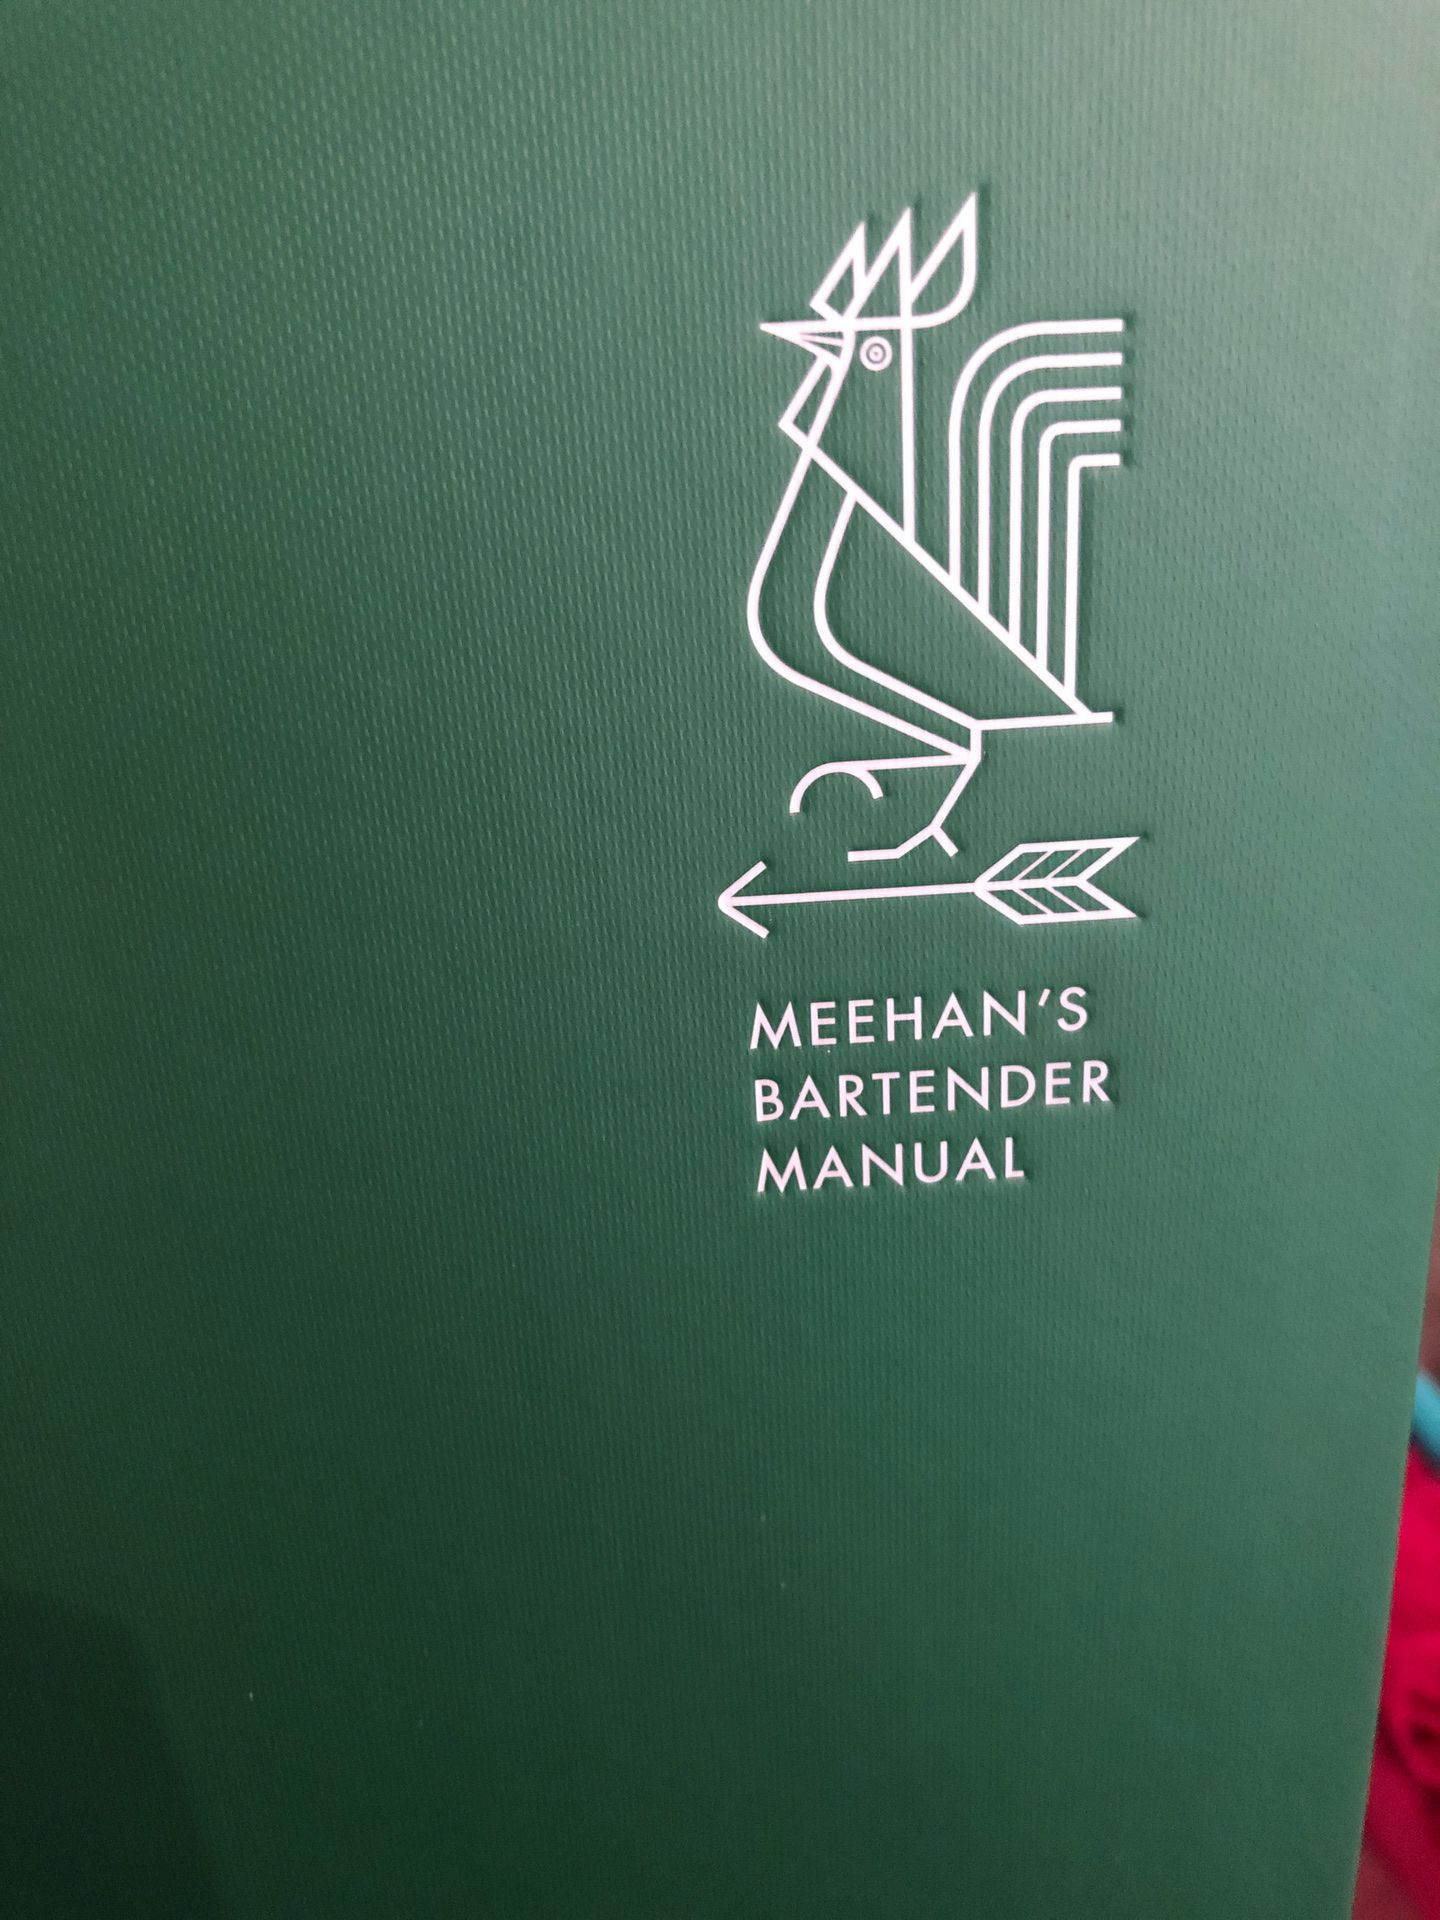 Meehans bartender Manual book